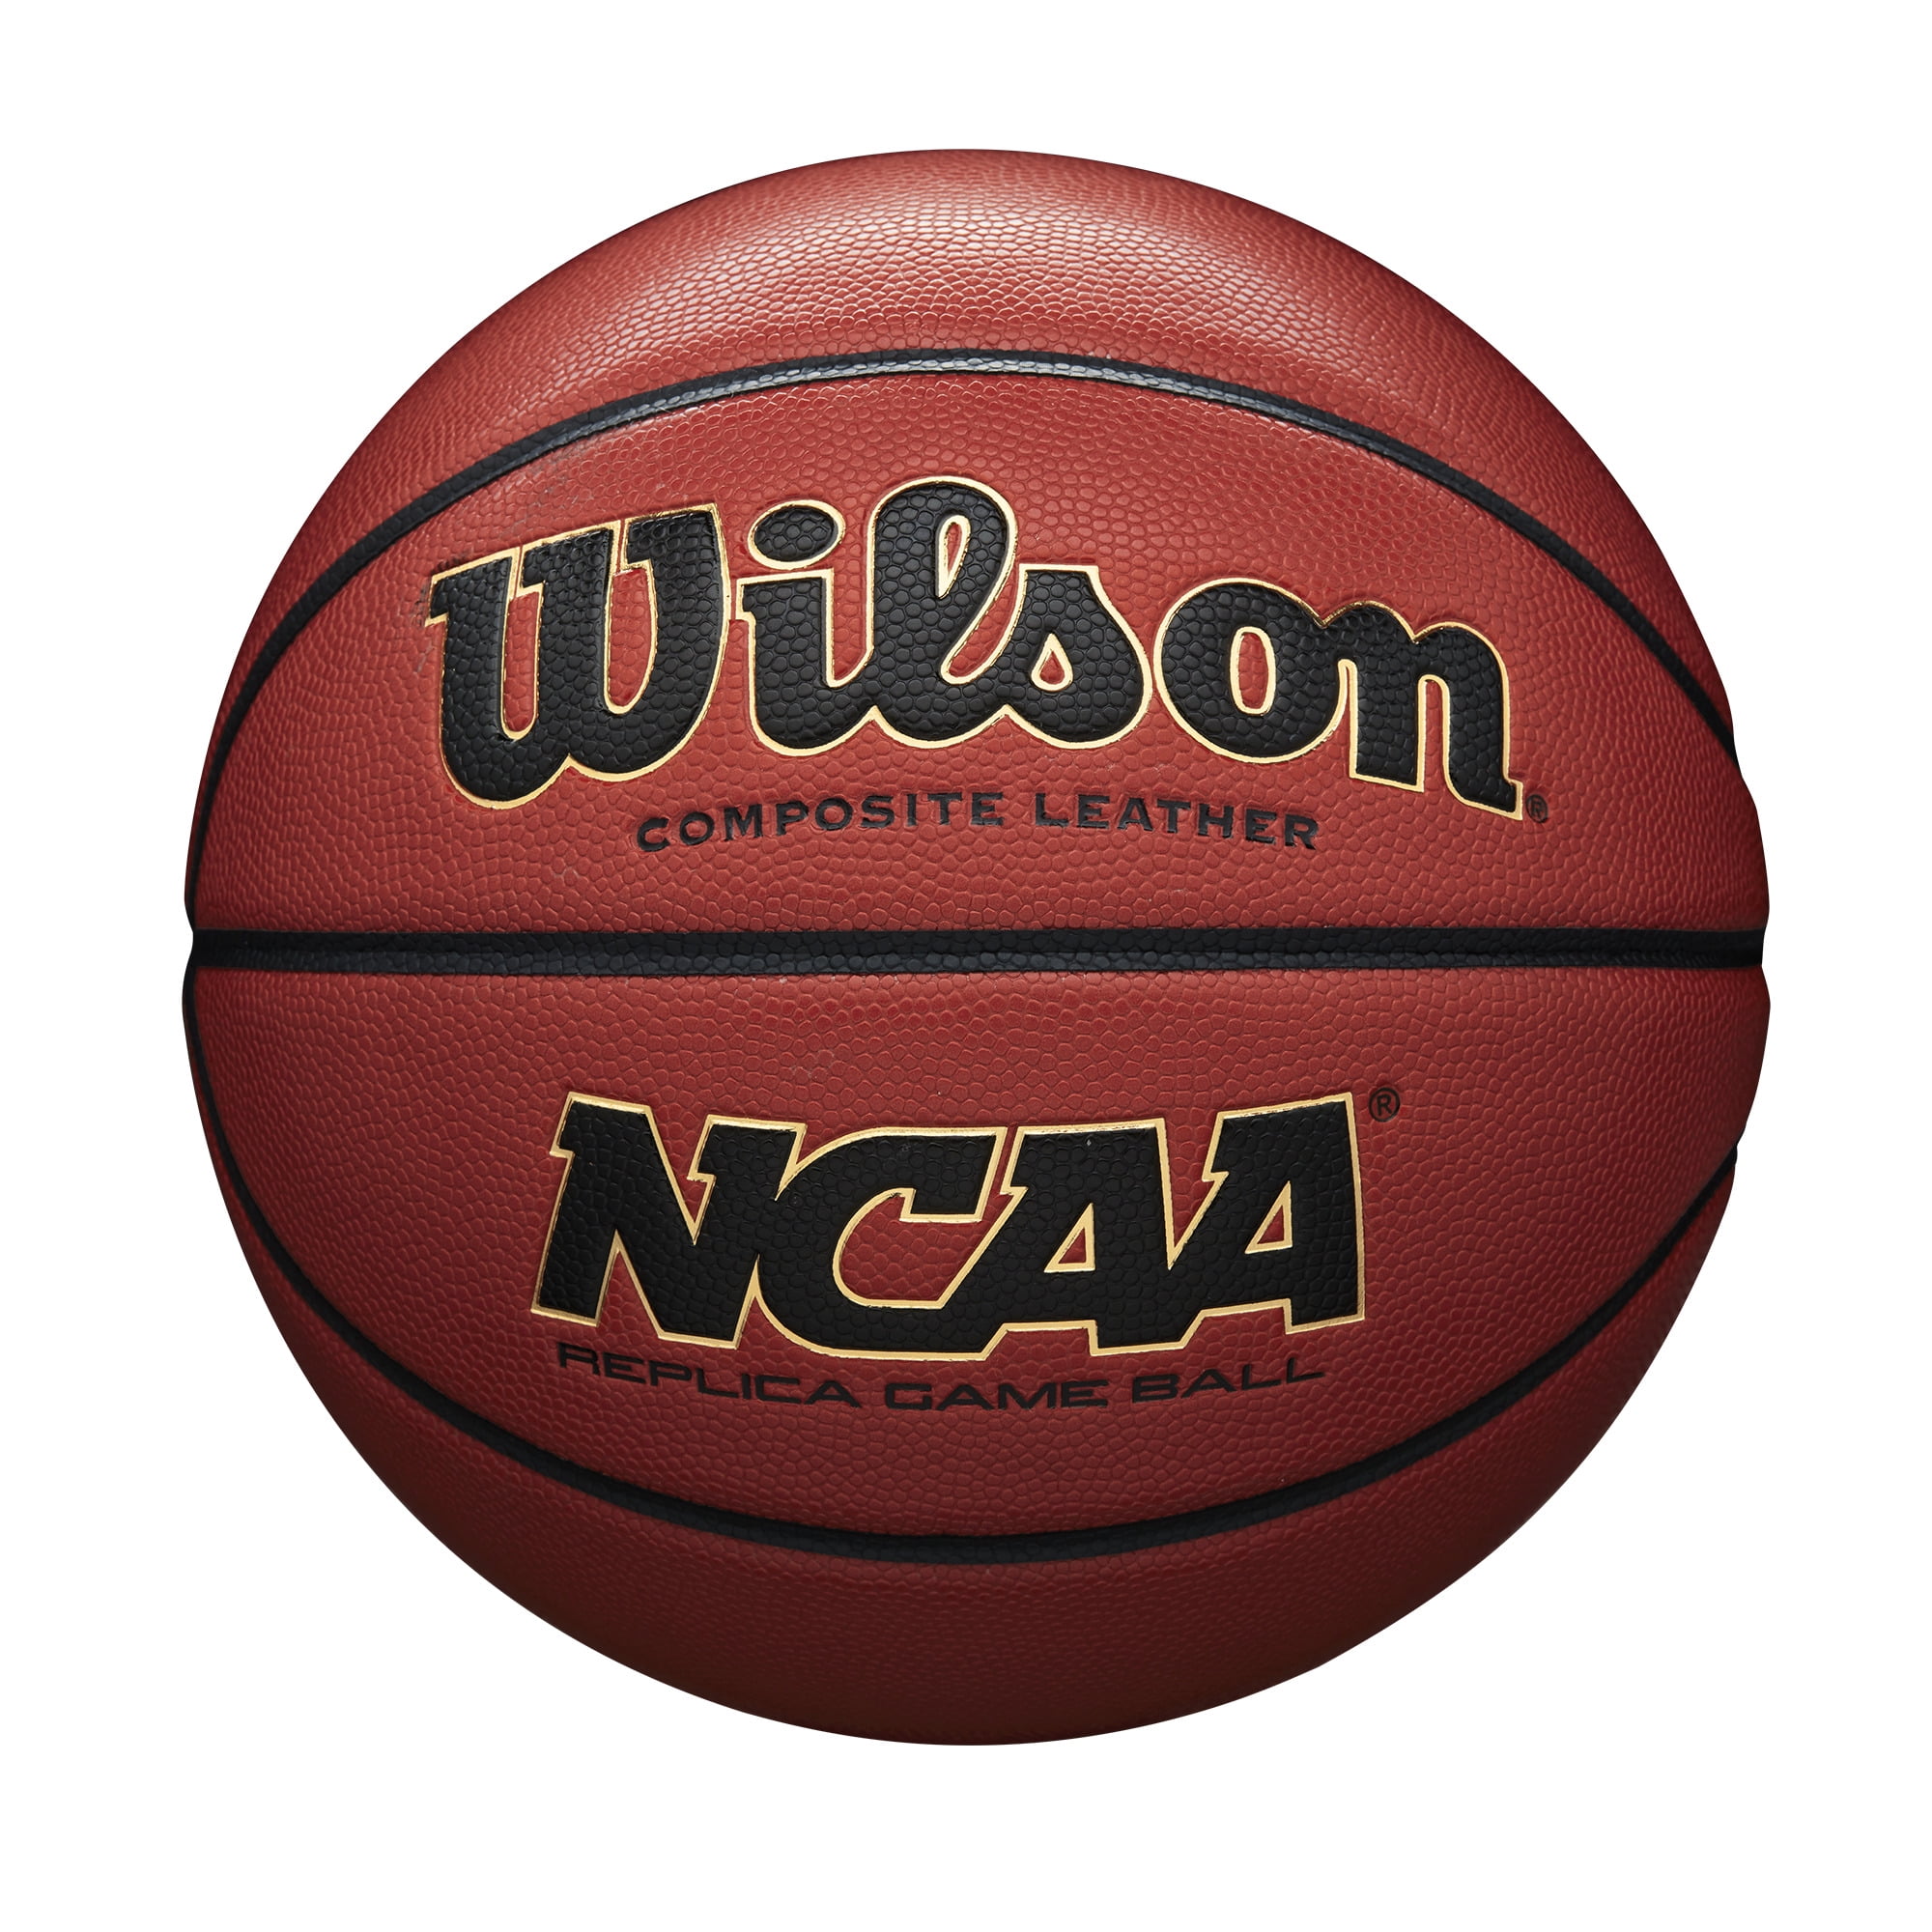 WILSON NCAA INTERMEDIATE BASKETBALL 28.5 FREE SHIPPING 